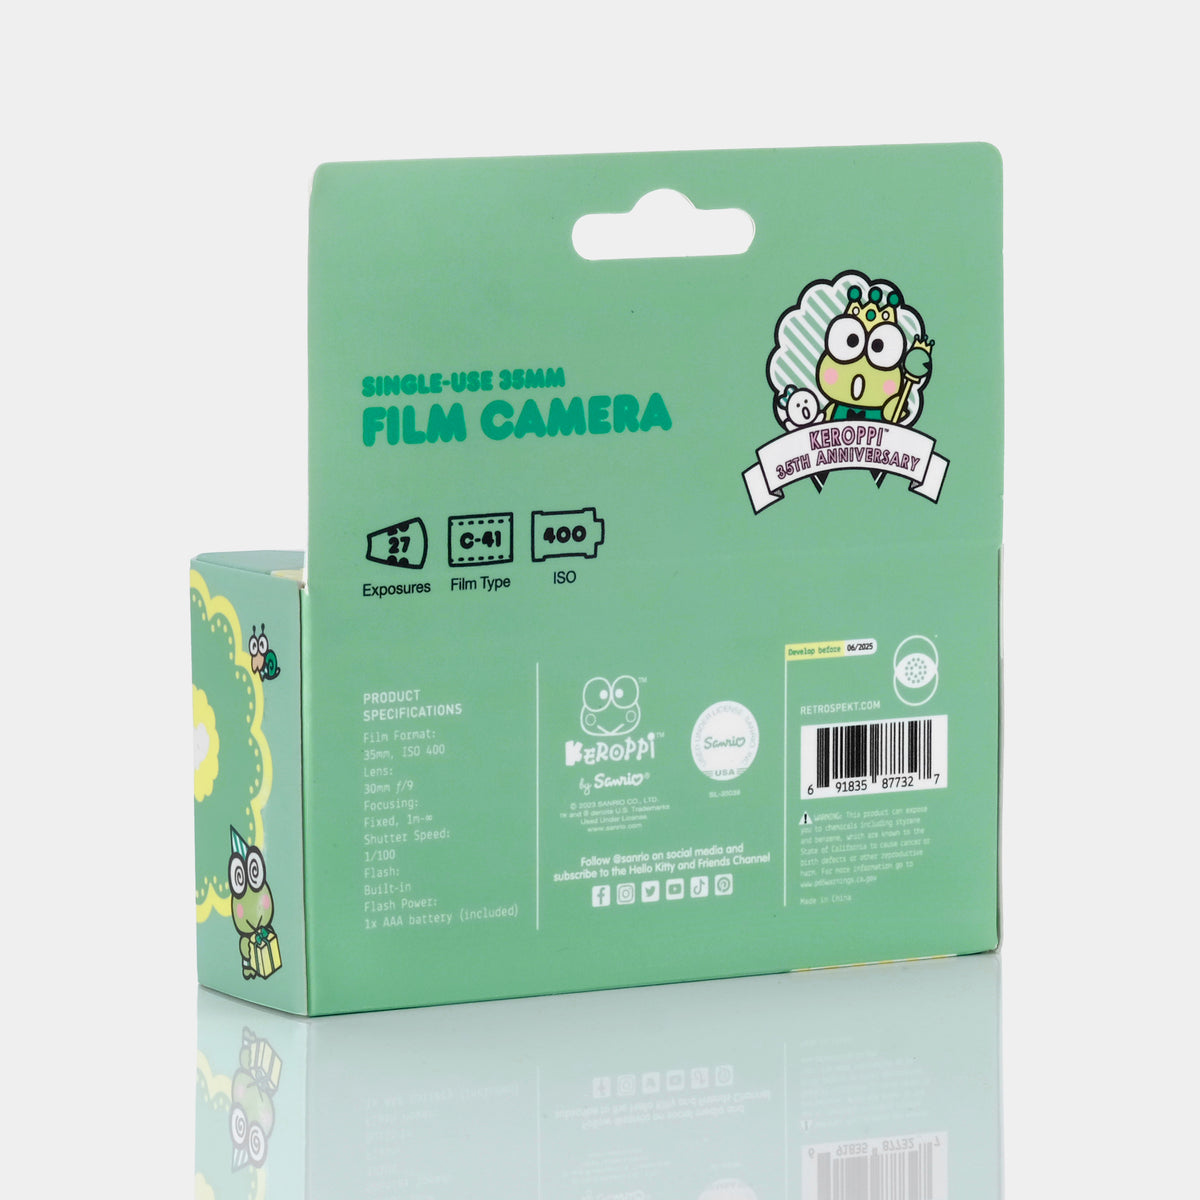 Keroppi x Polaroid 600 Instant Film Camera